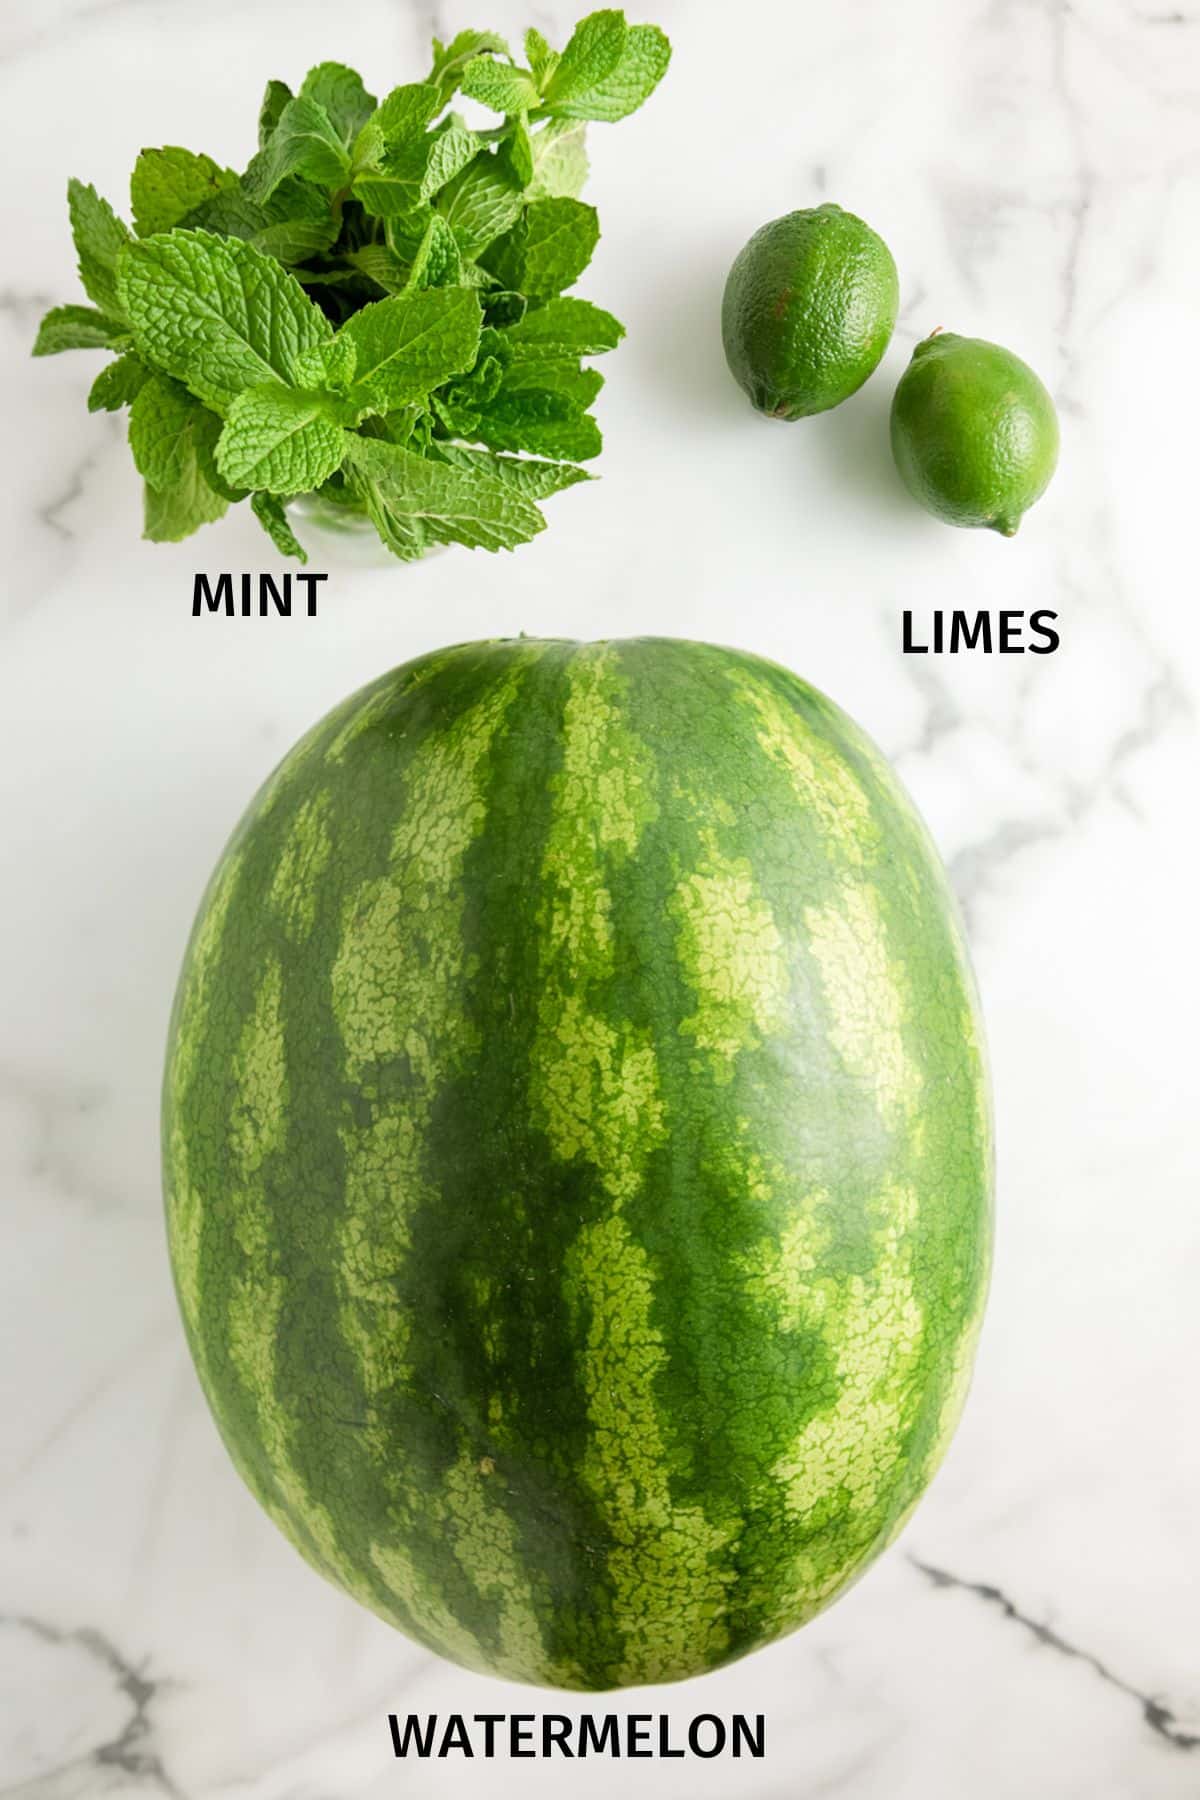 ingredients for making watermelon mint juice.